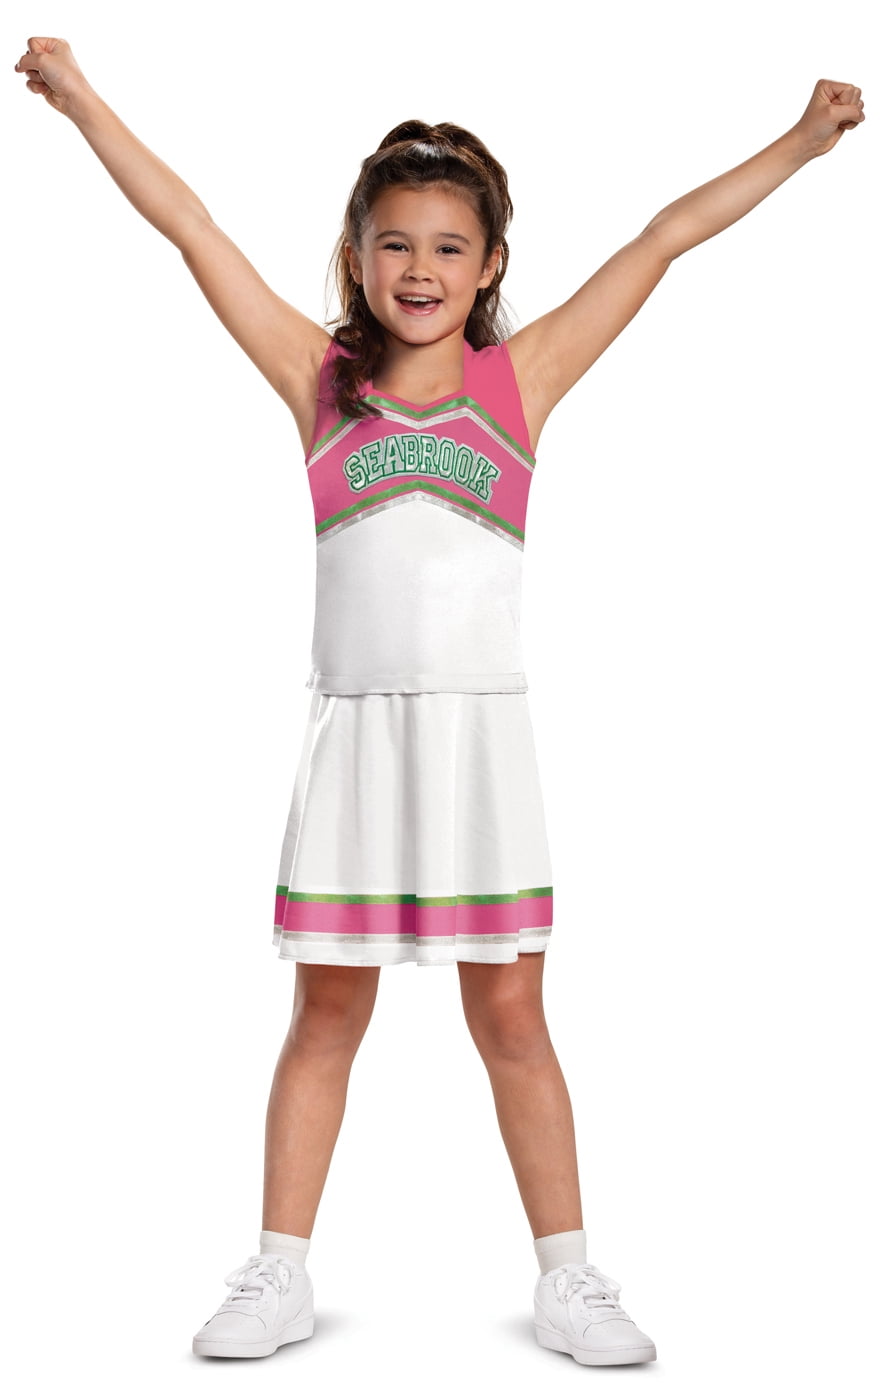 Cosplay.fm Kids Child National USA Cheerleader Cheer Costume Outfit Shirt Skirt